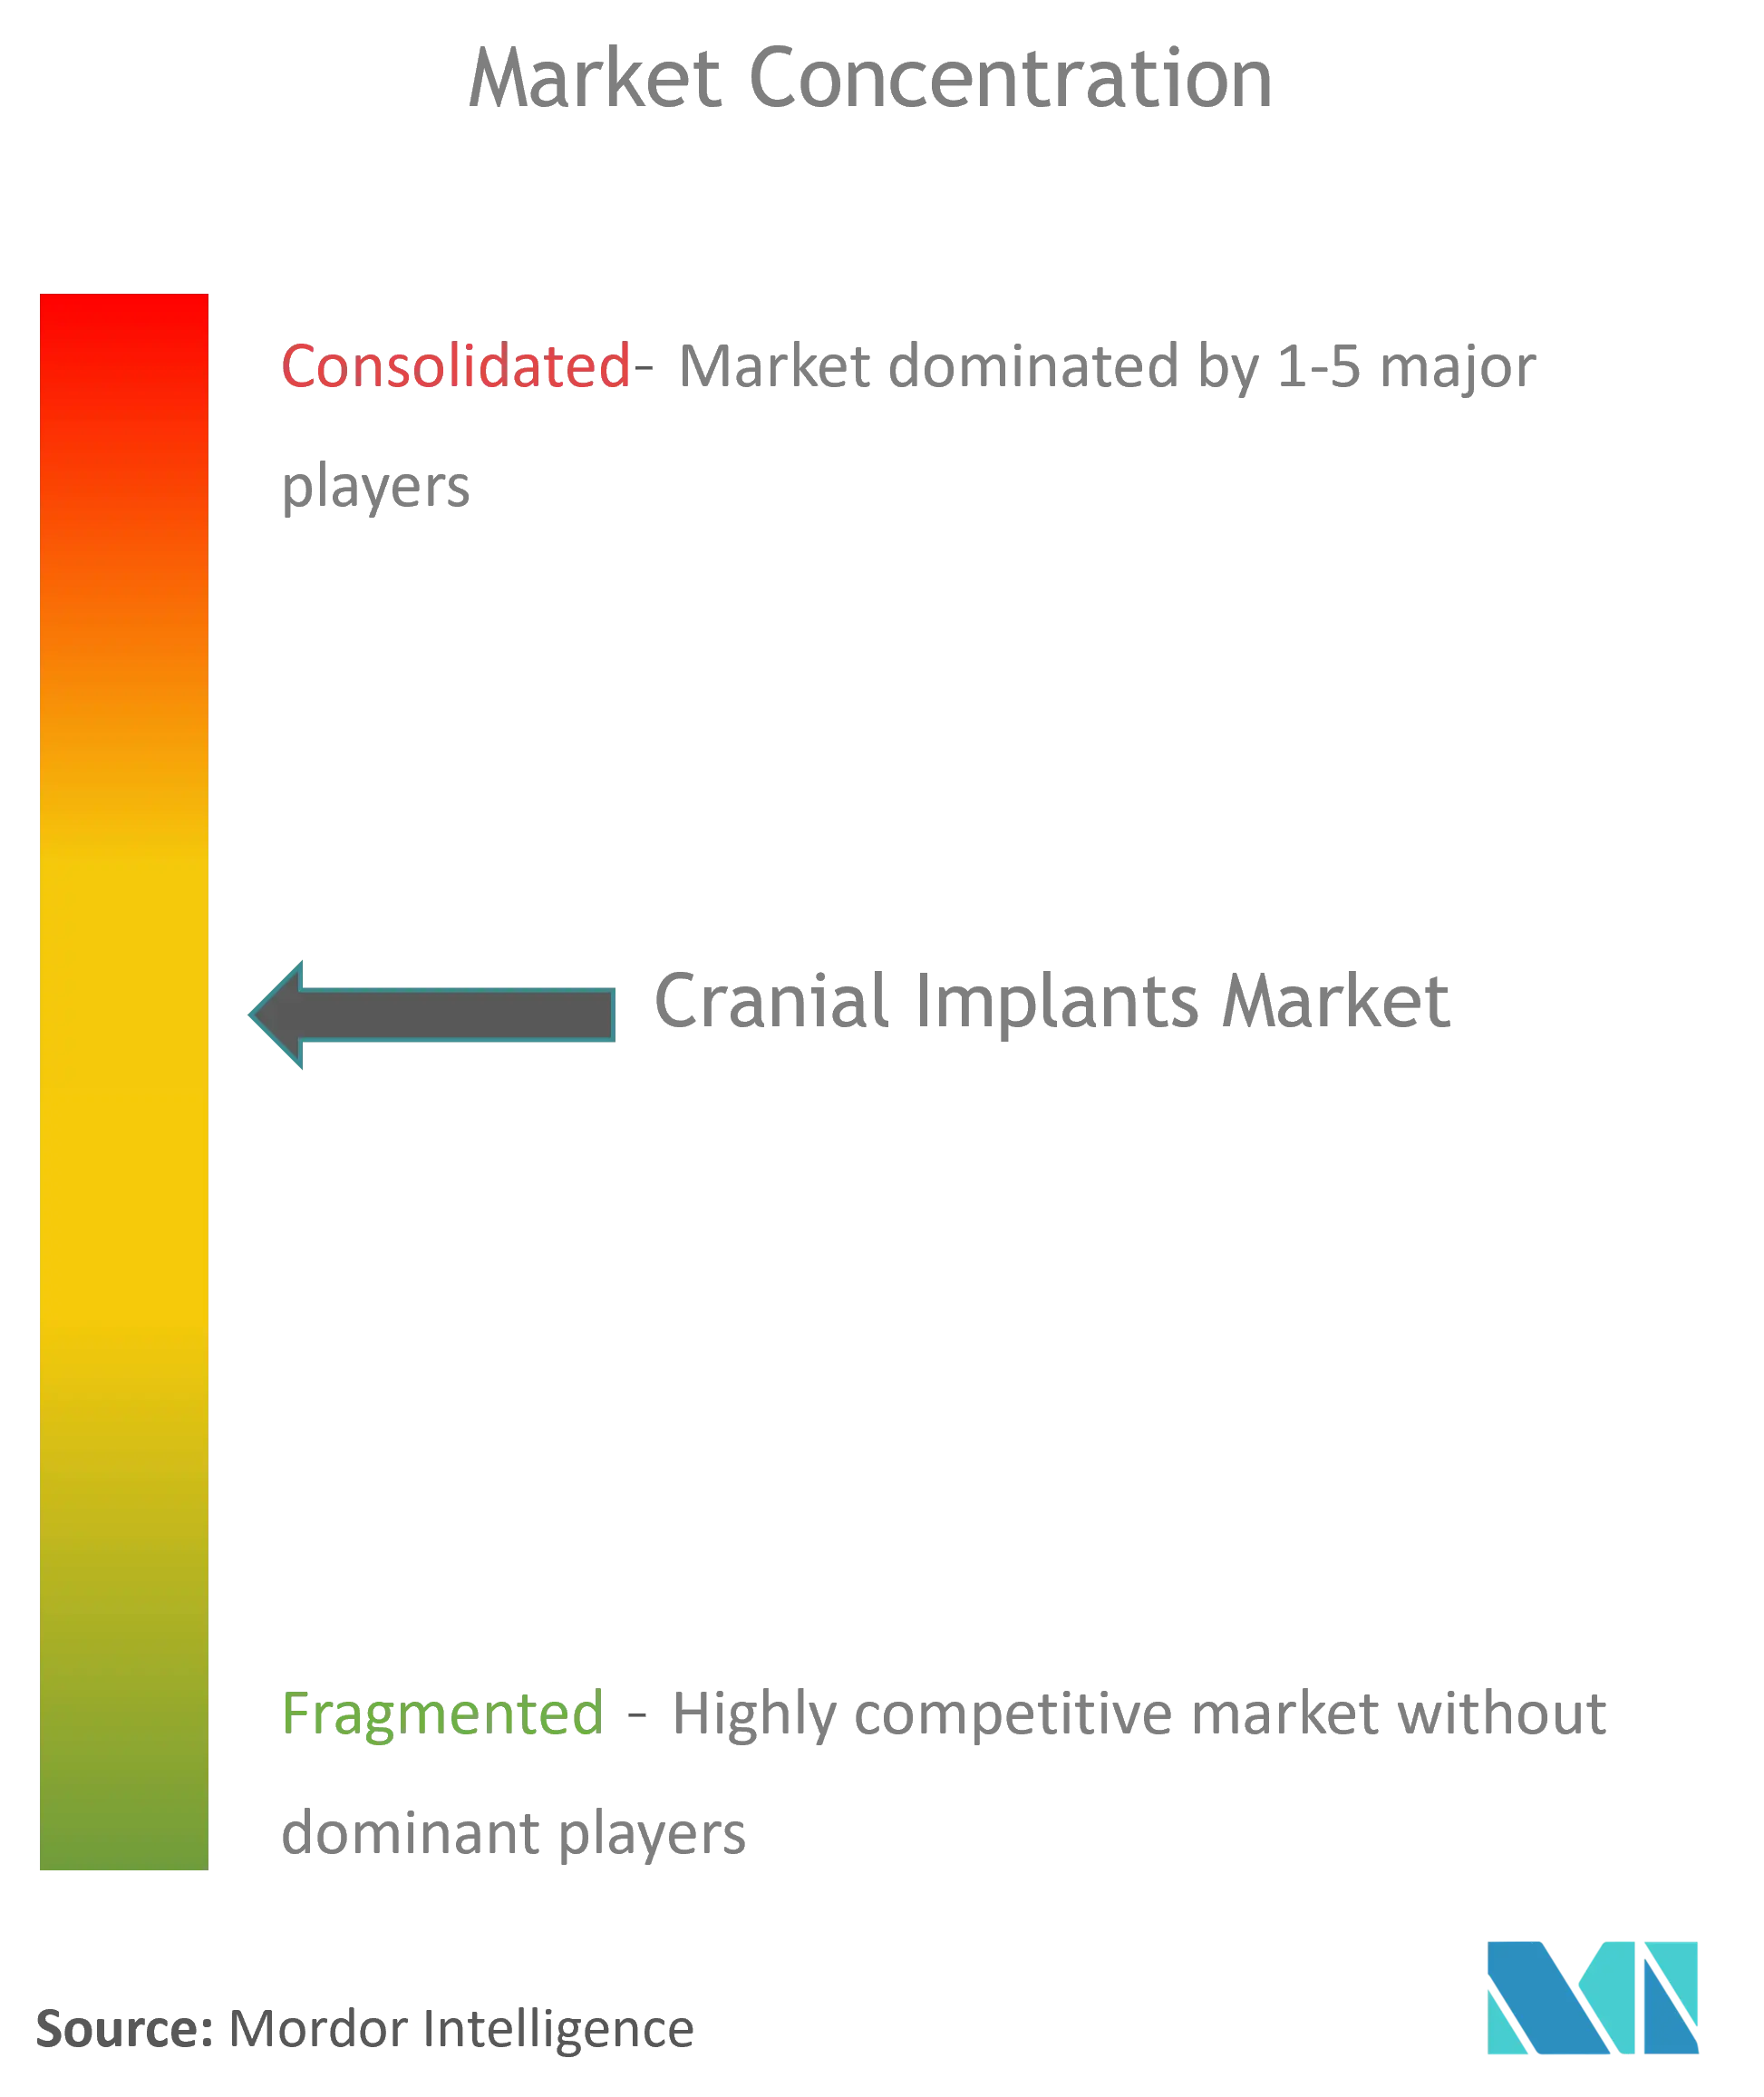 Cranial Implants Market Concentration